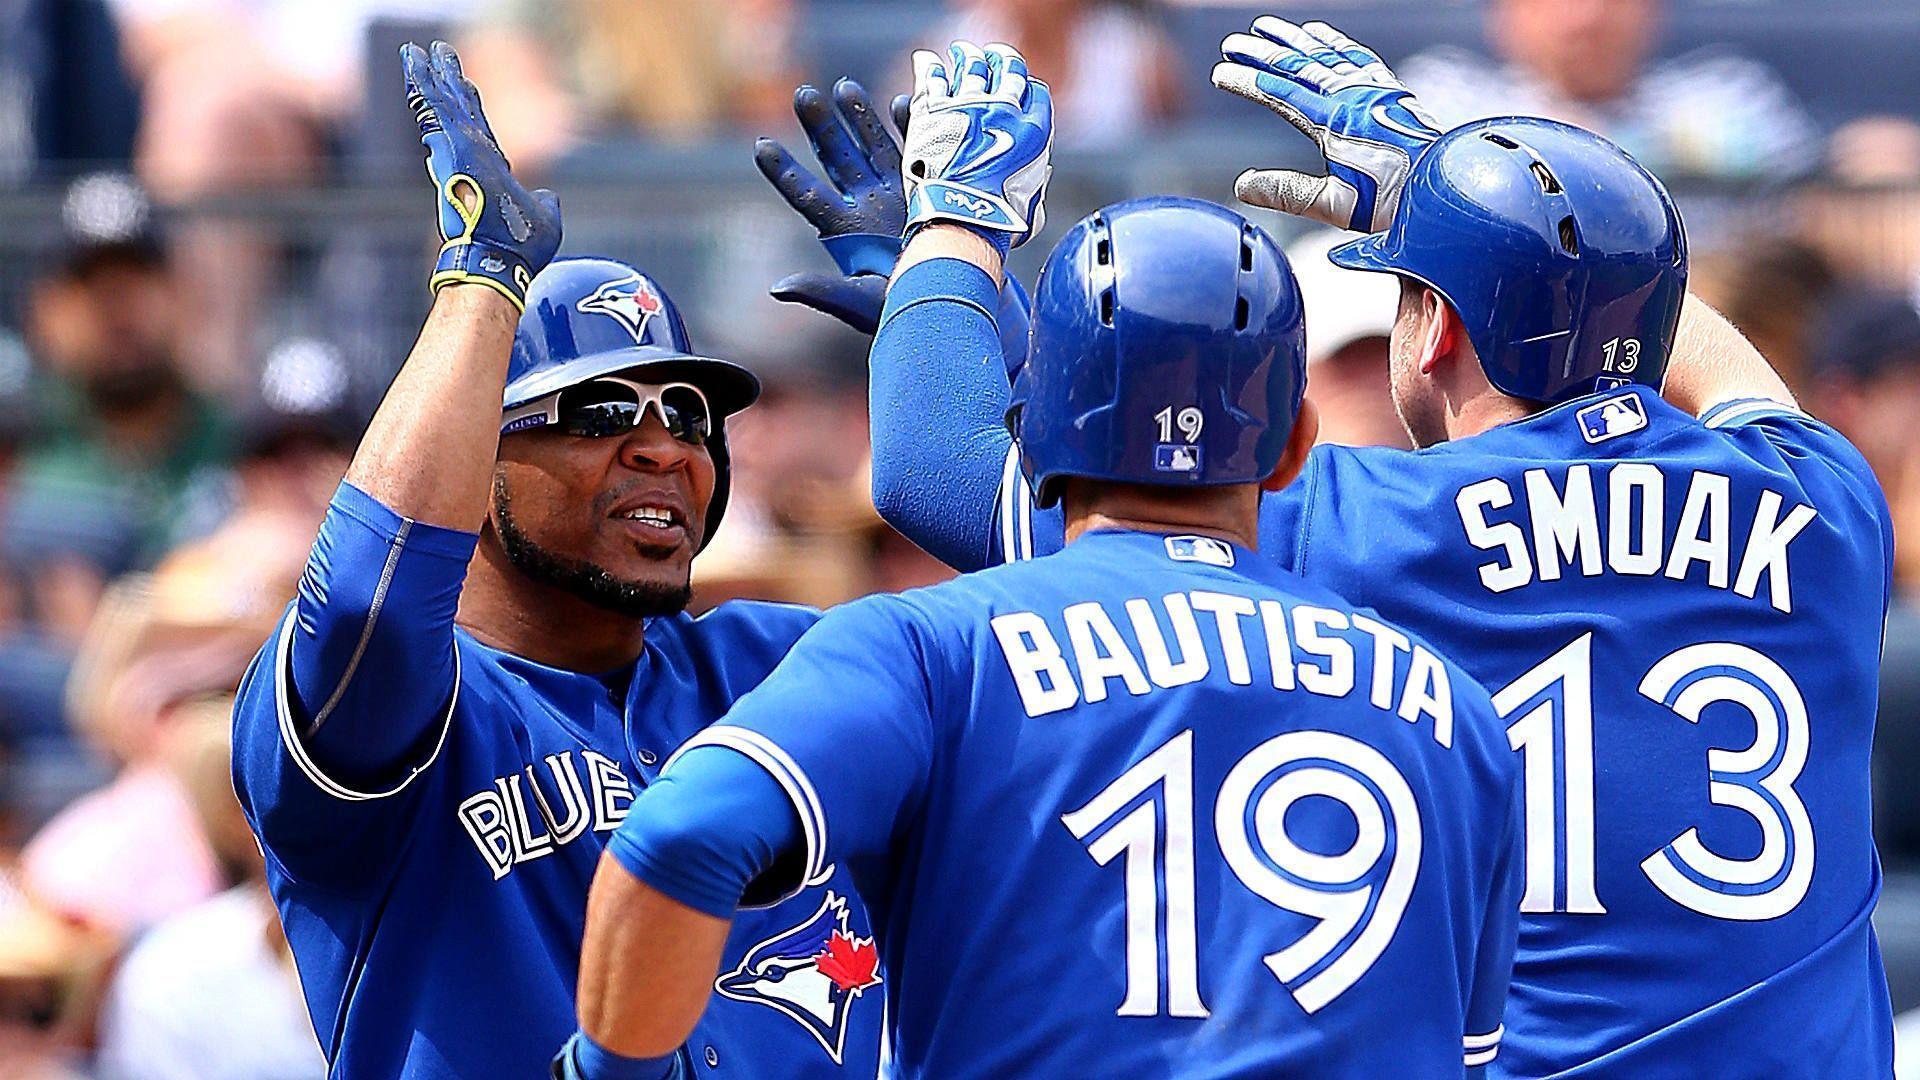 MLB postseason 2015: Get to know the Toronto Blue Jays